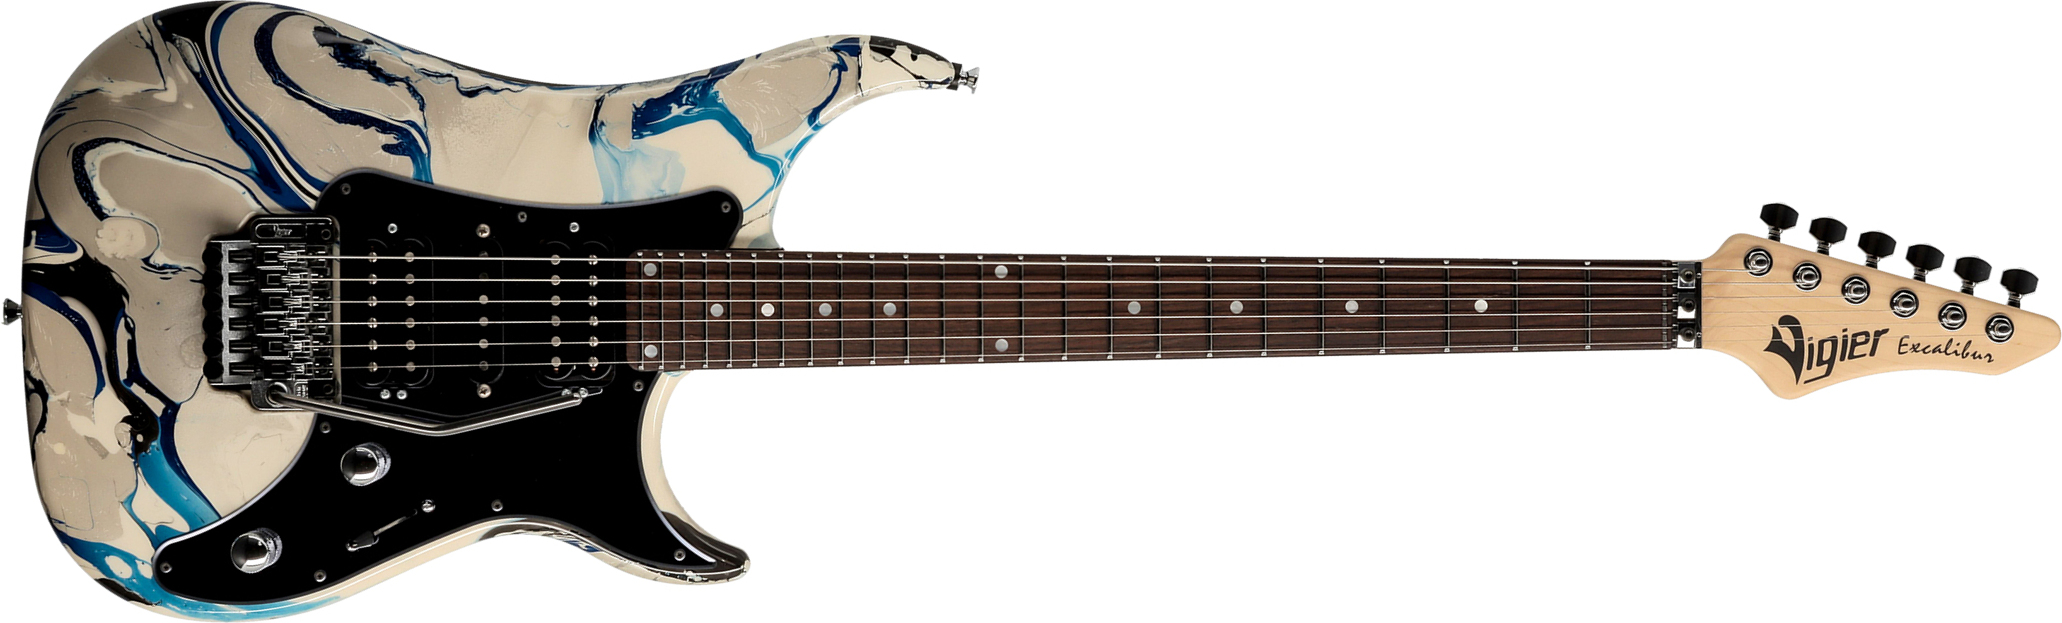 Vigier Excalibur Original Hsh Fr Rw - Rock Art Grey Blue - E-Gitarre in Str-Form - Main picture